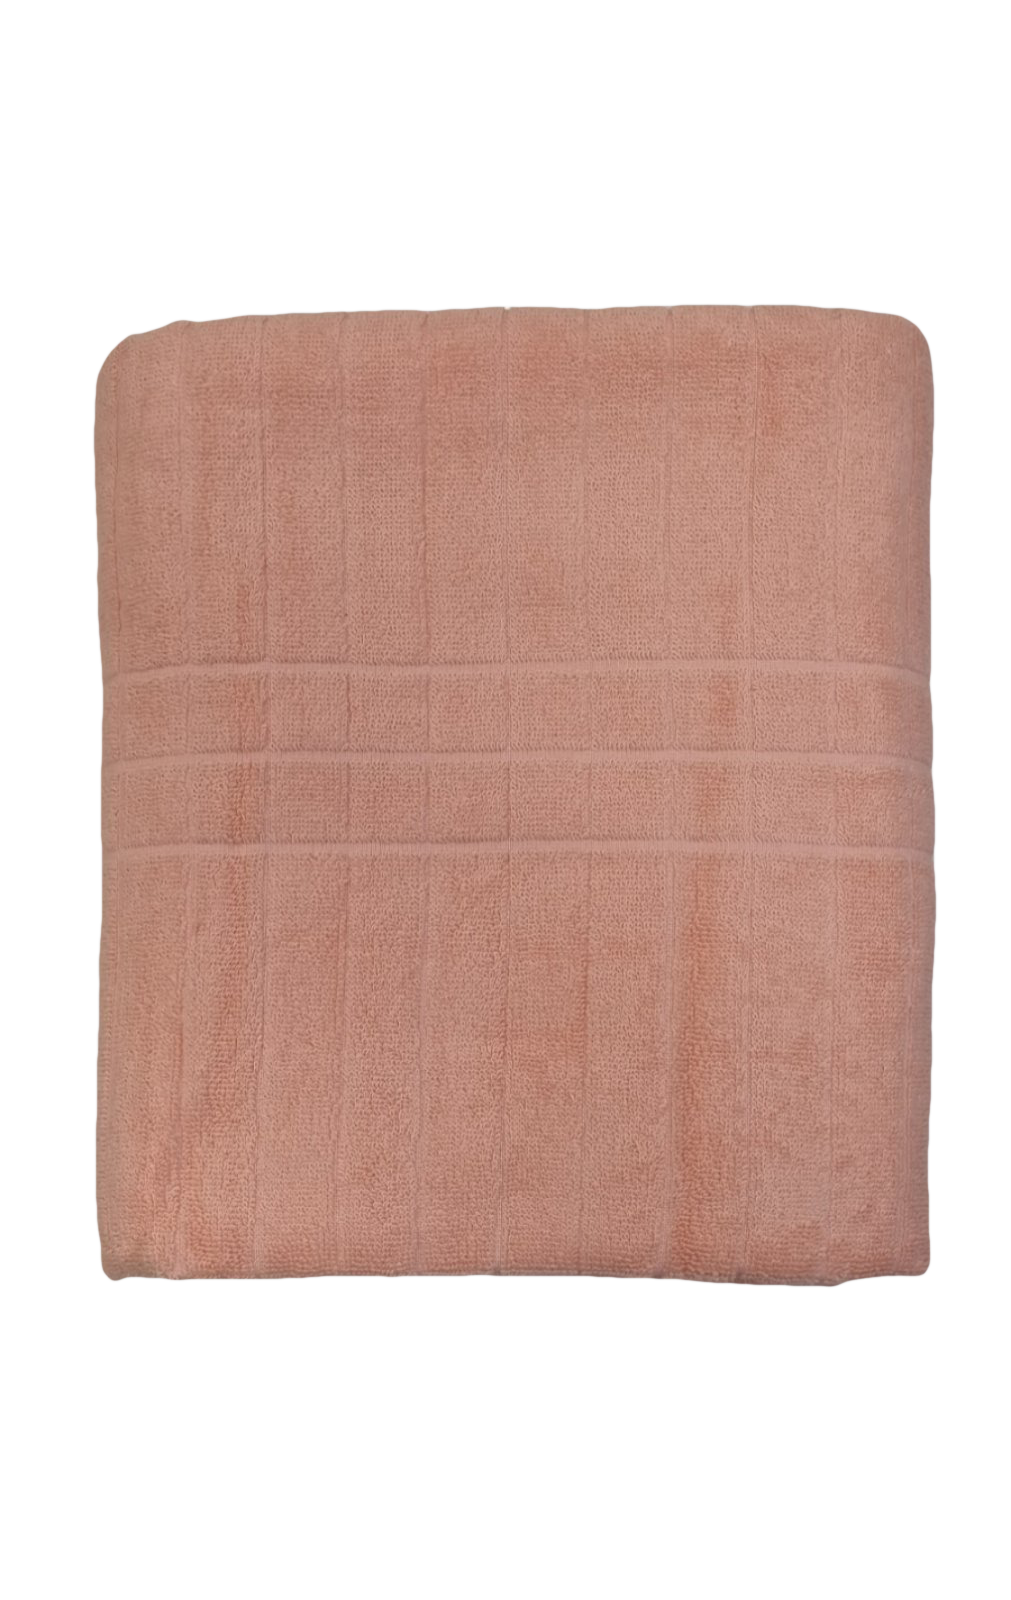 140x190cm Frotirski prekrivač Bojana rozi 13-1310 Frotirka